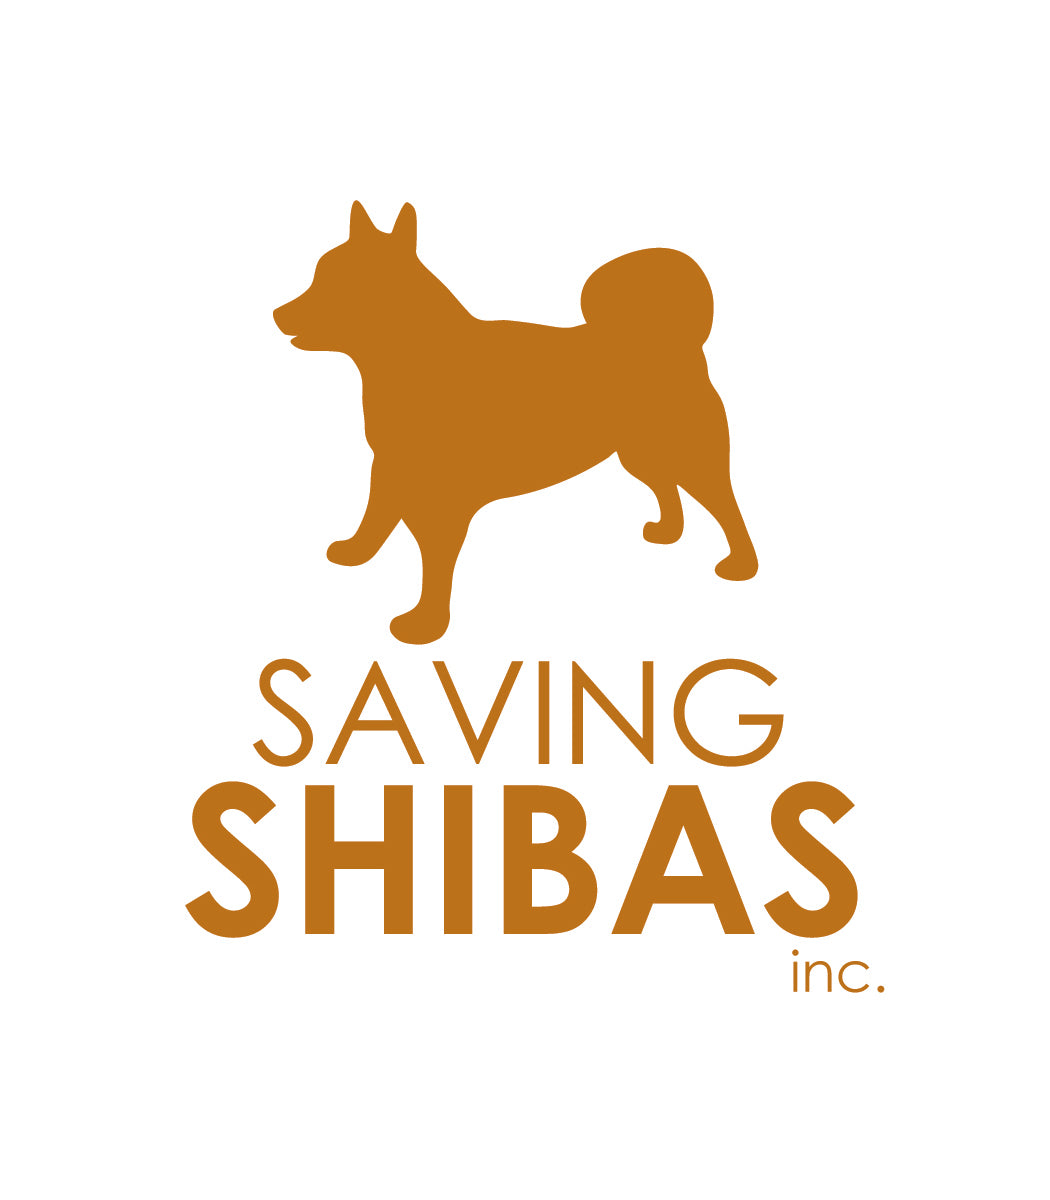 Saving Shibas Inc